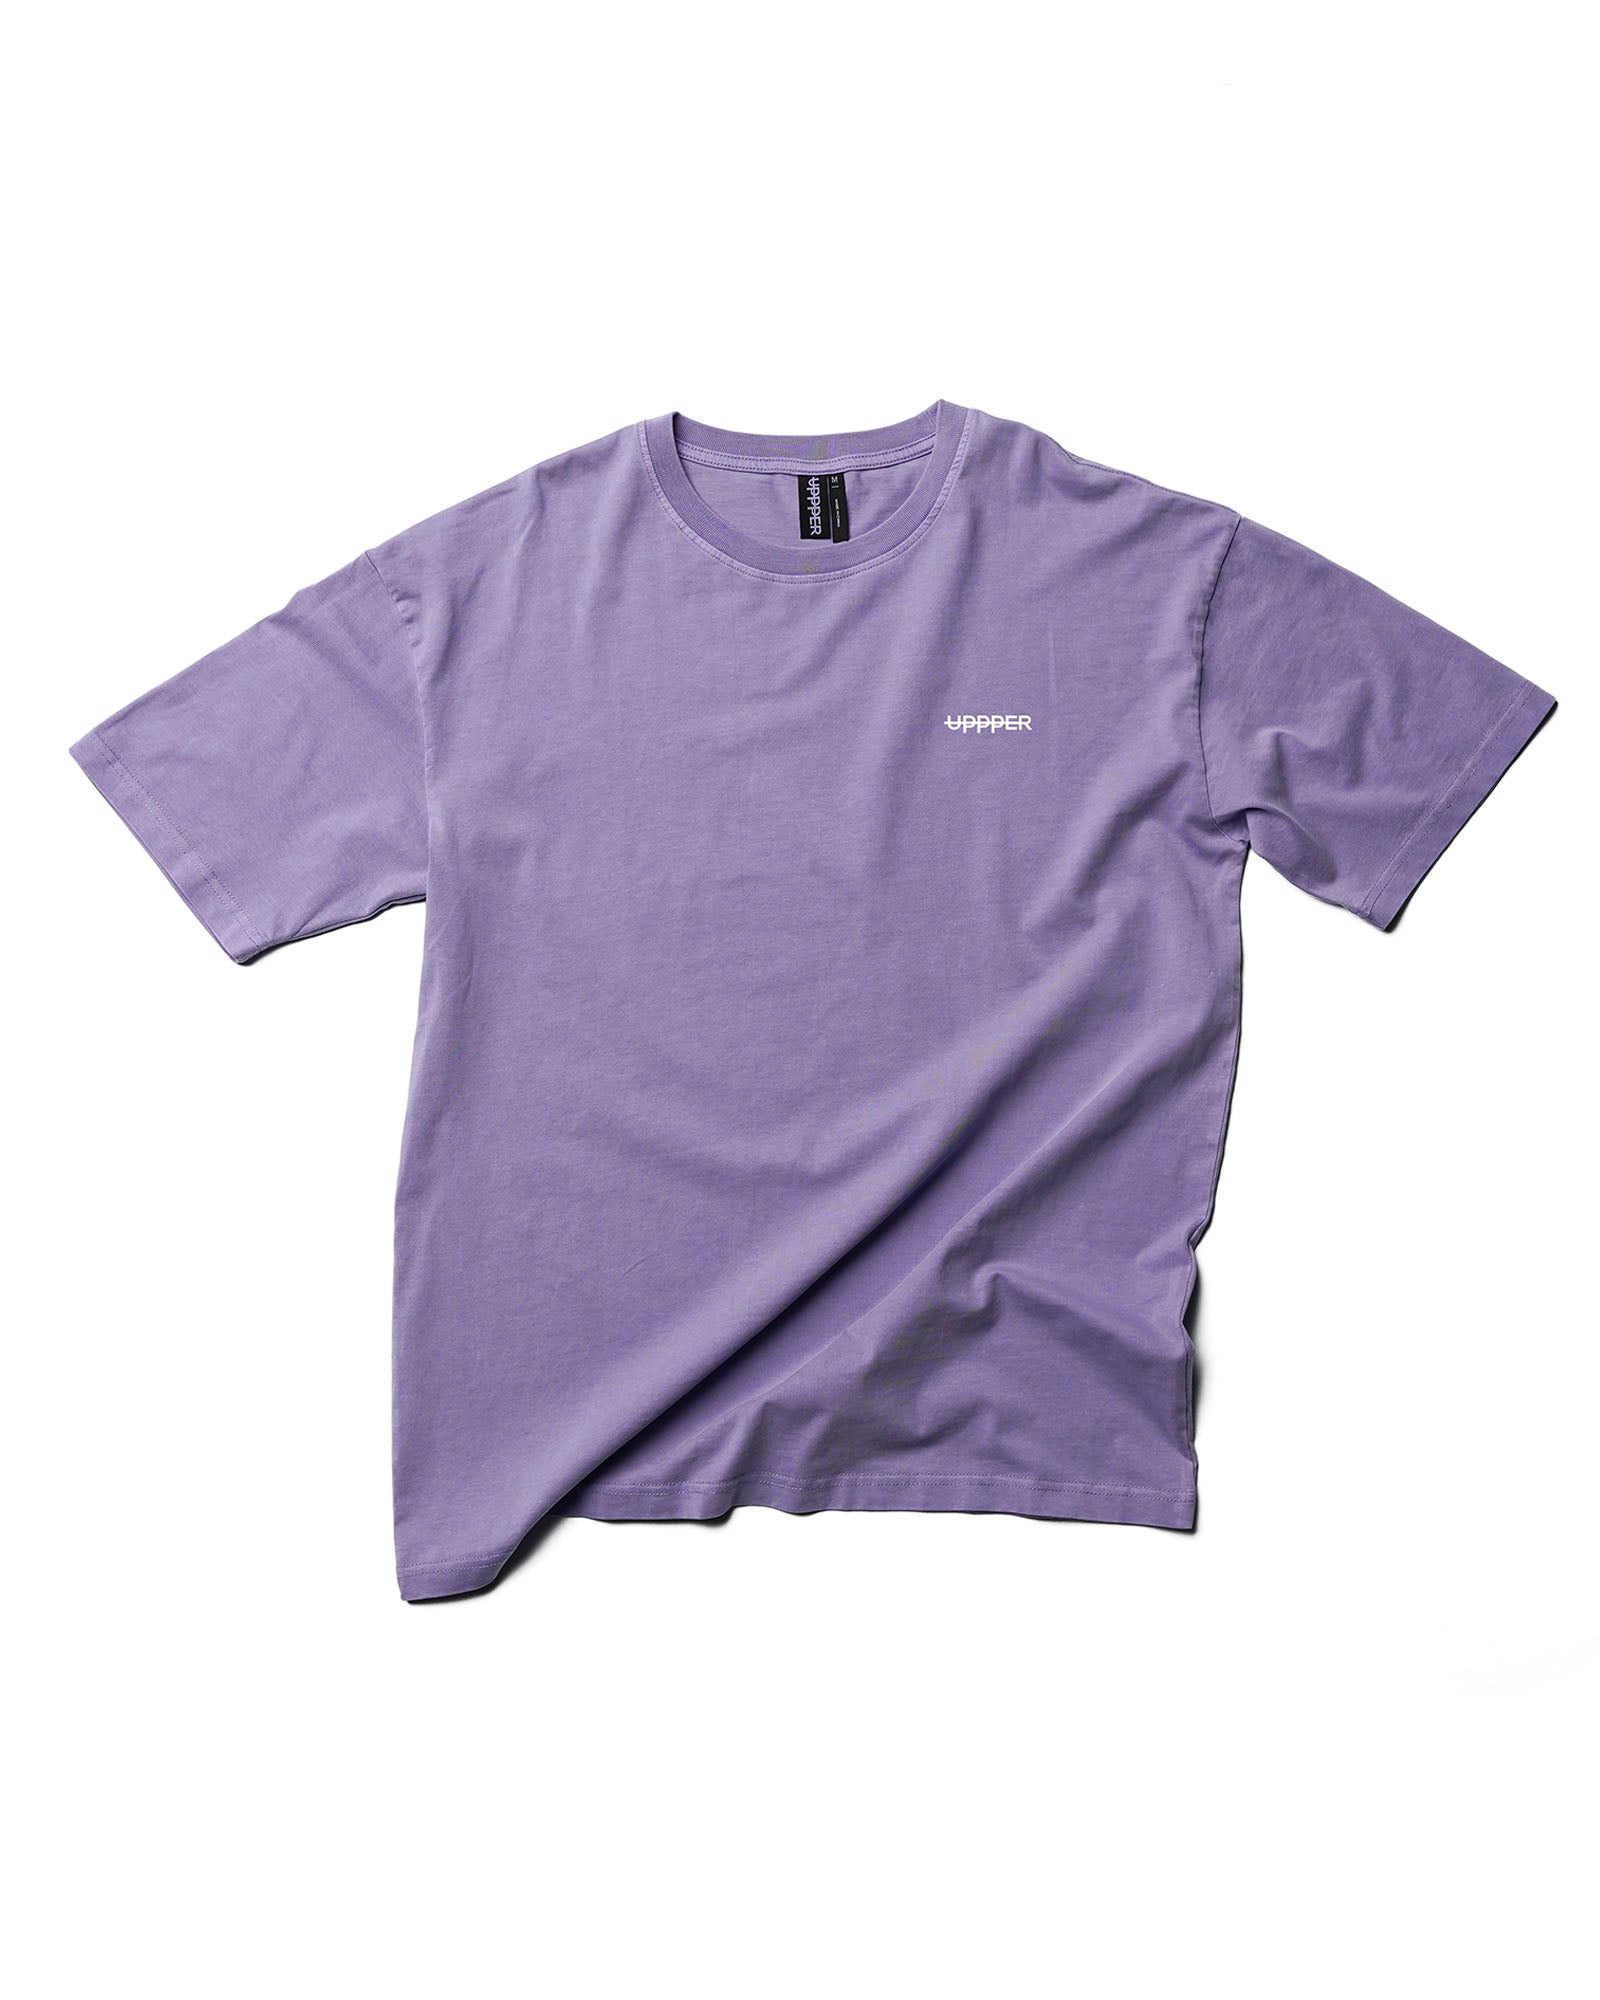 uppper t-shirt FTN lavender